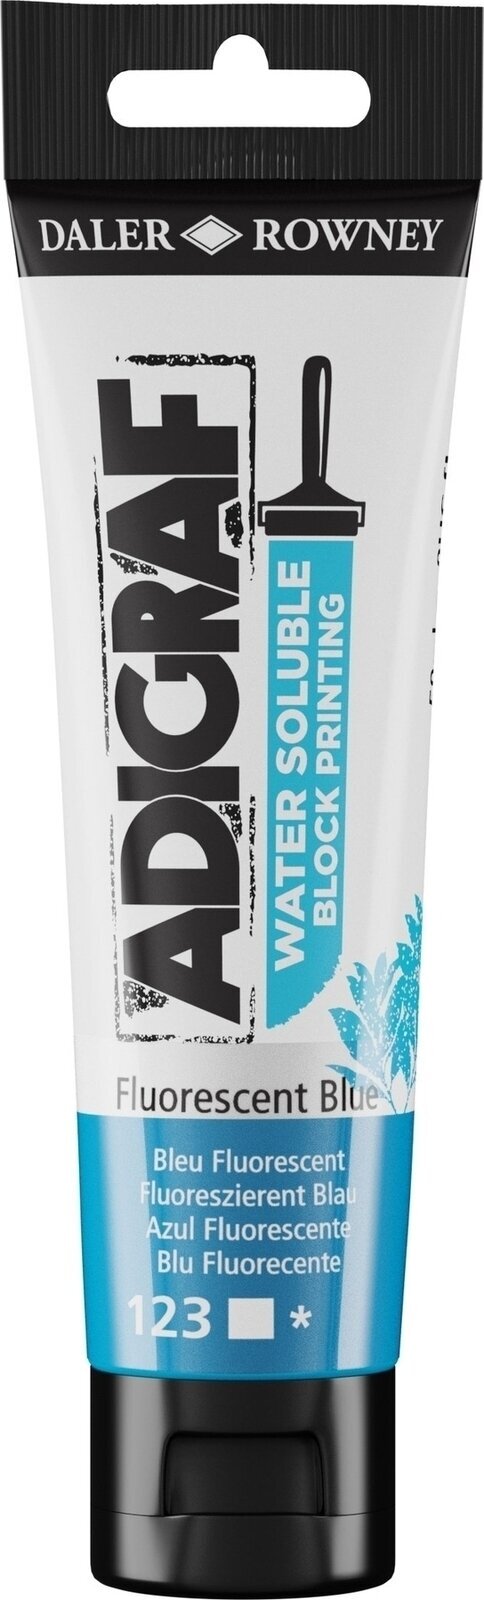 Verf voor linosnede Daler Rowney Adigraf Block Printing Water Soluble Colour Verf voor linosnede Fluorescent Blue 59 ml